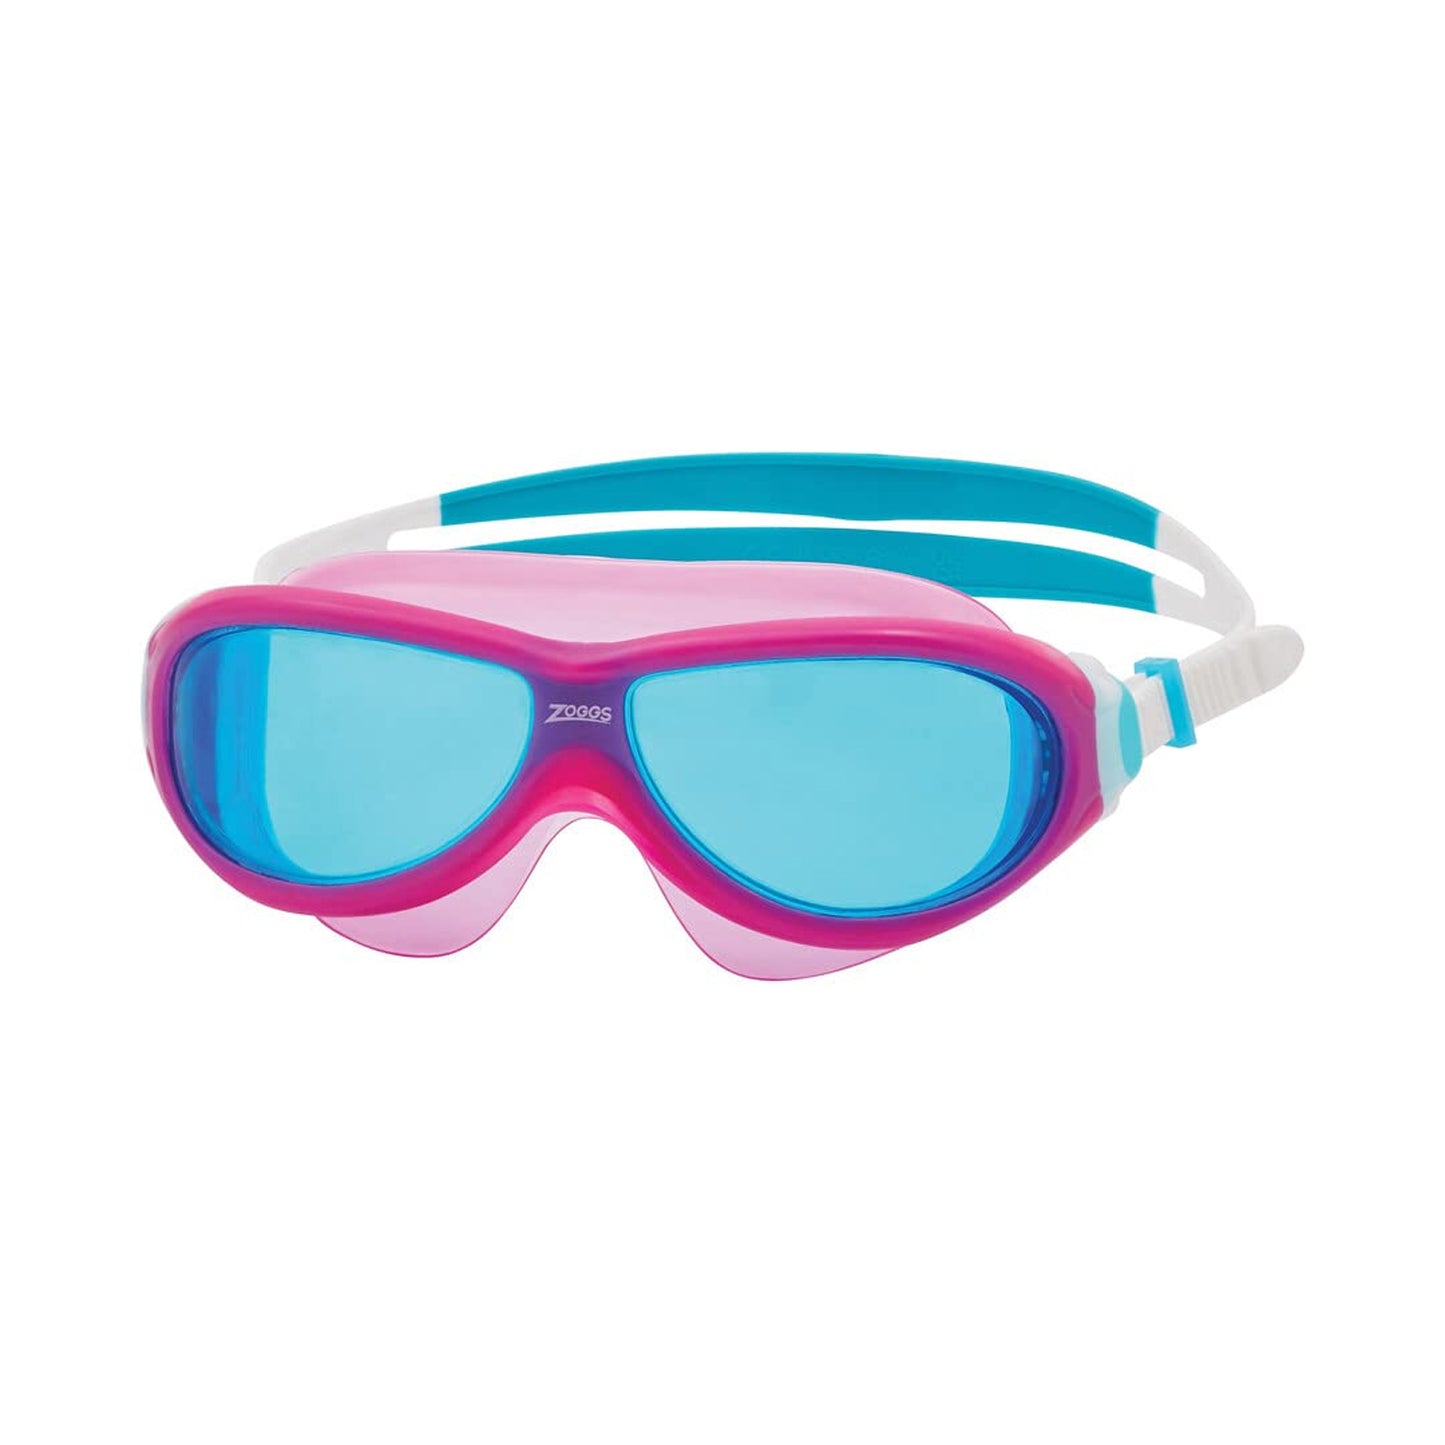 Zoggs Phantom Junior Mask Swimming Goggles, Pink/White/Tint Blue - Best Price online Prokicksports.com